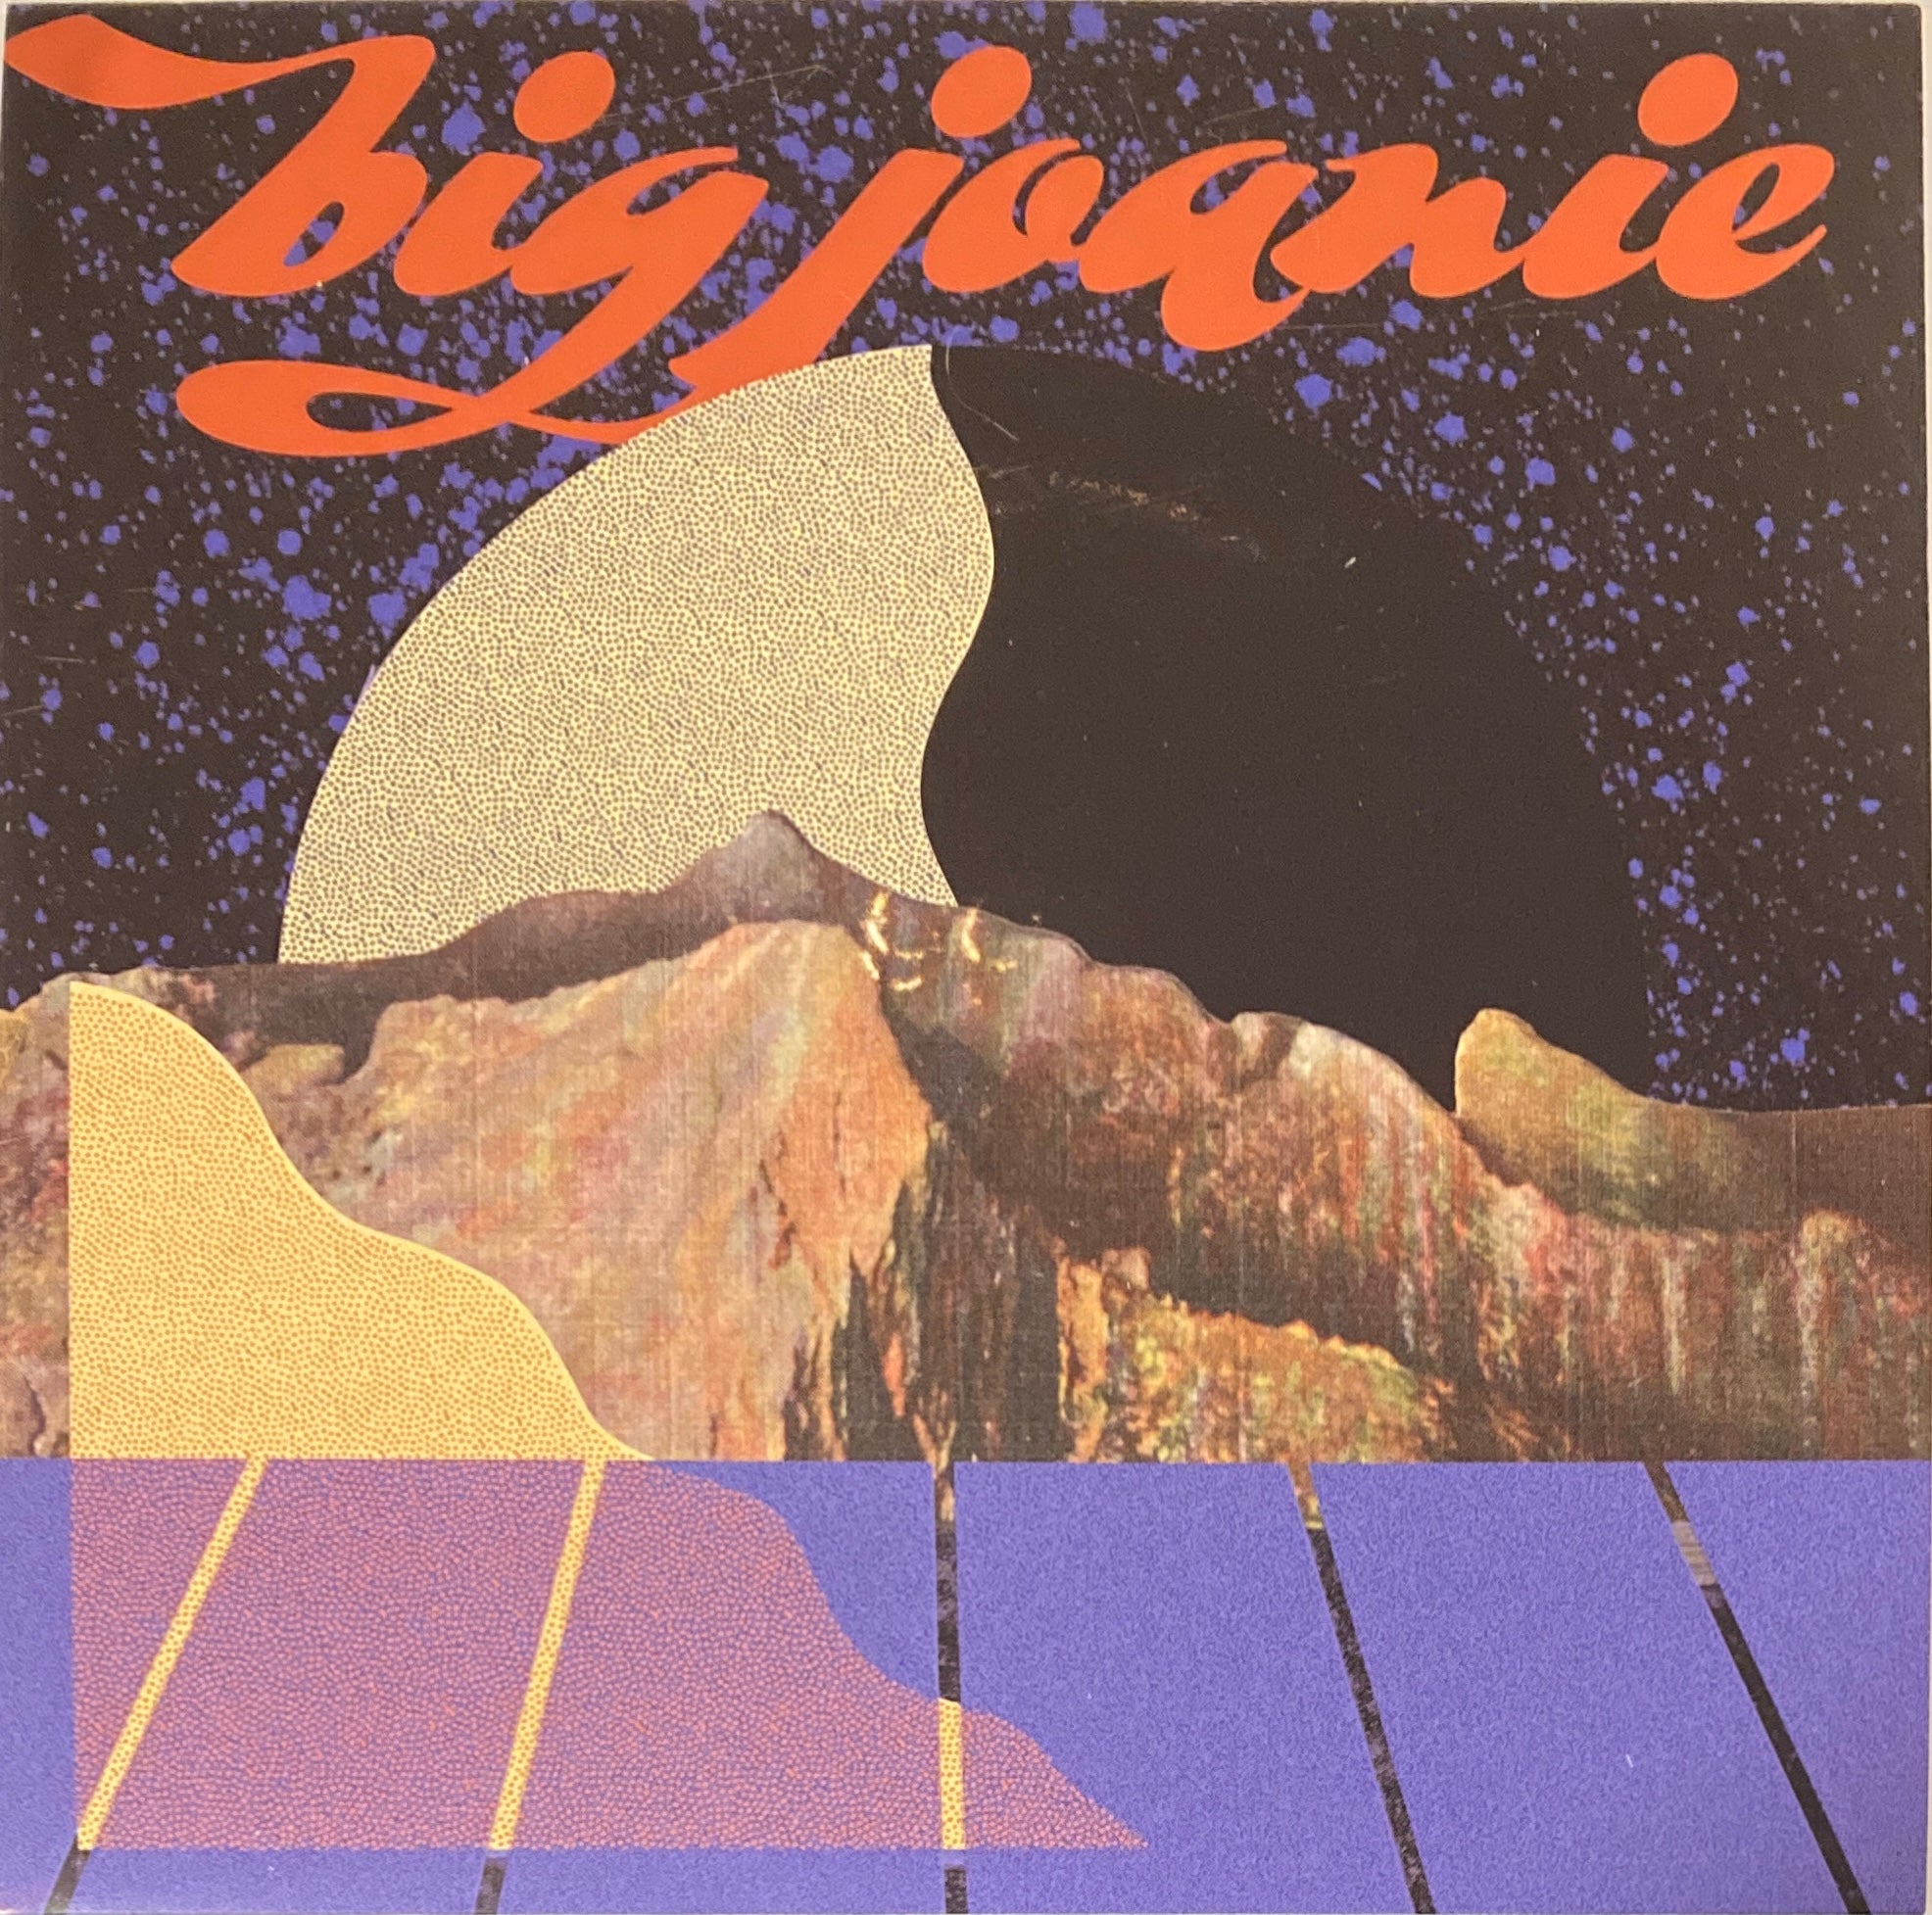 Big Joanie “Cranes In The Sky” Single (2020)